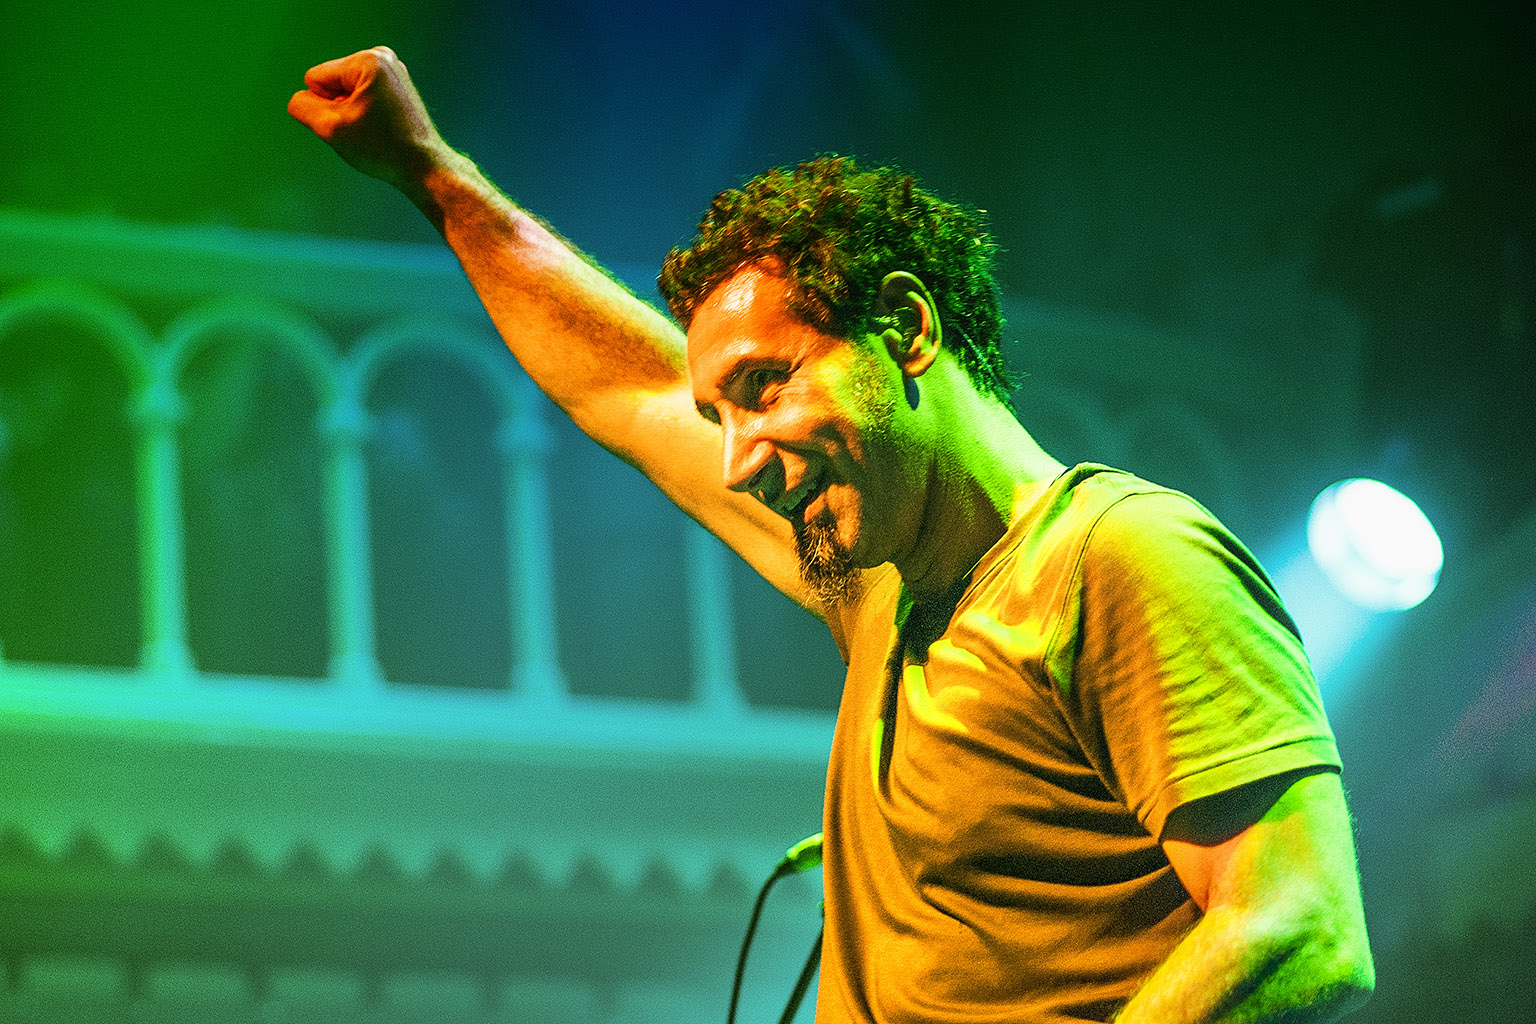 Serj Tankian, Paradiso, Amsterdam The Netherlands 13-10-2012